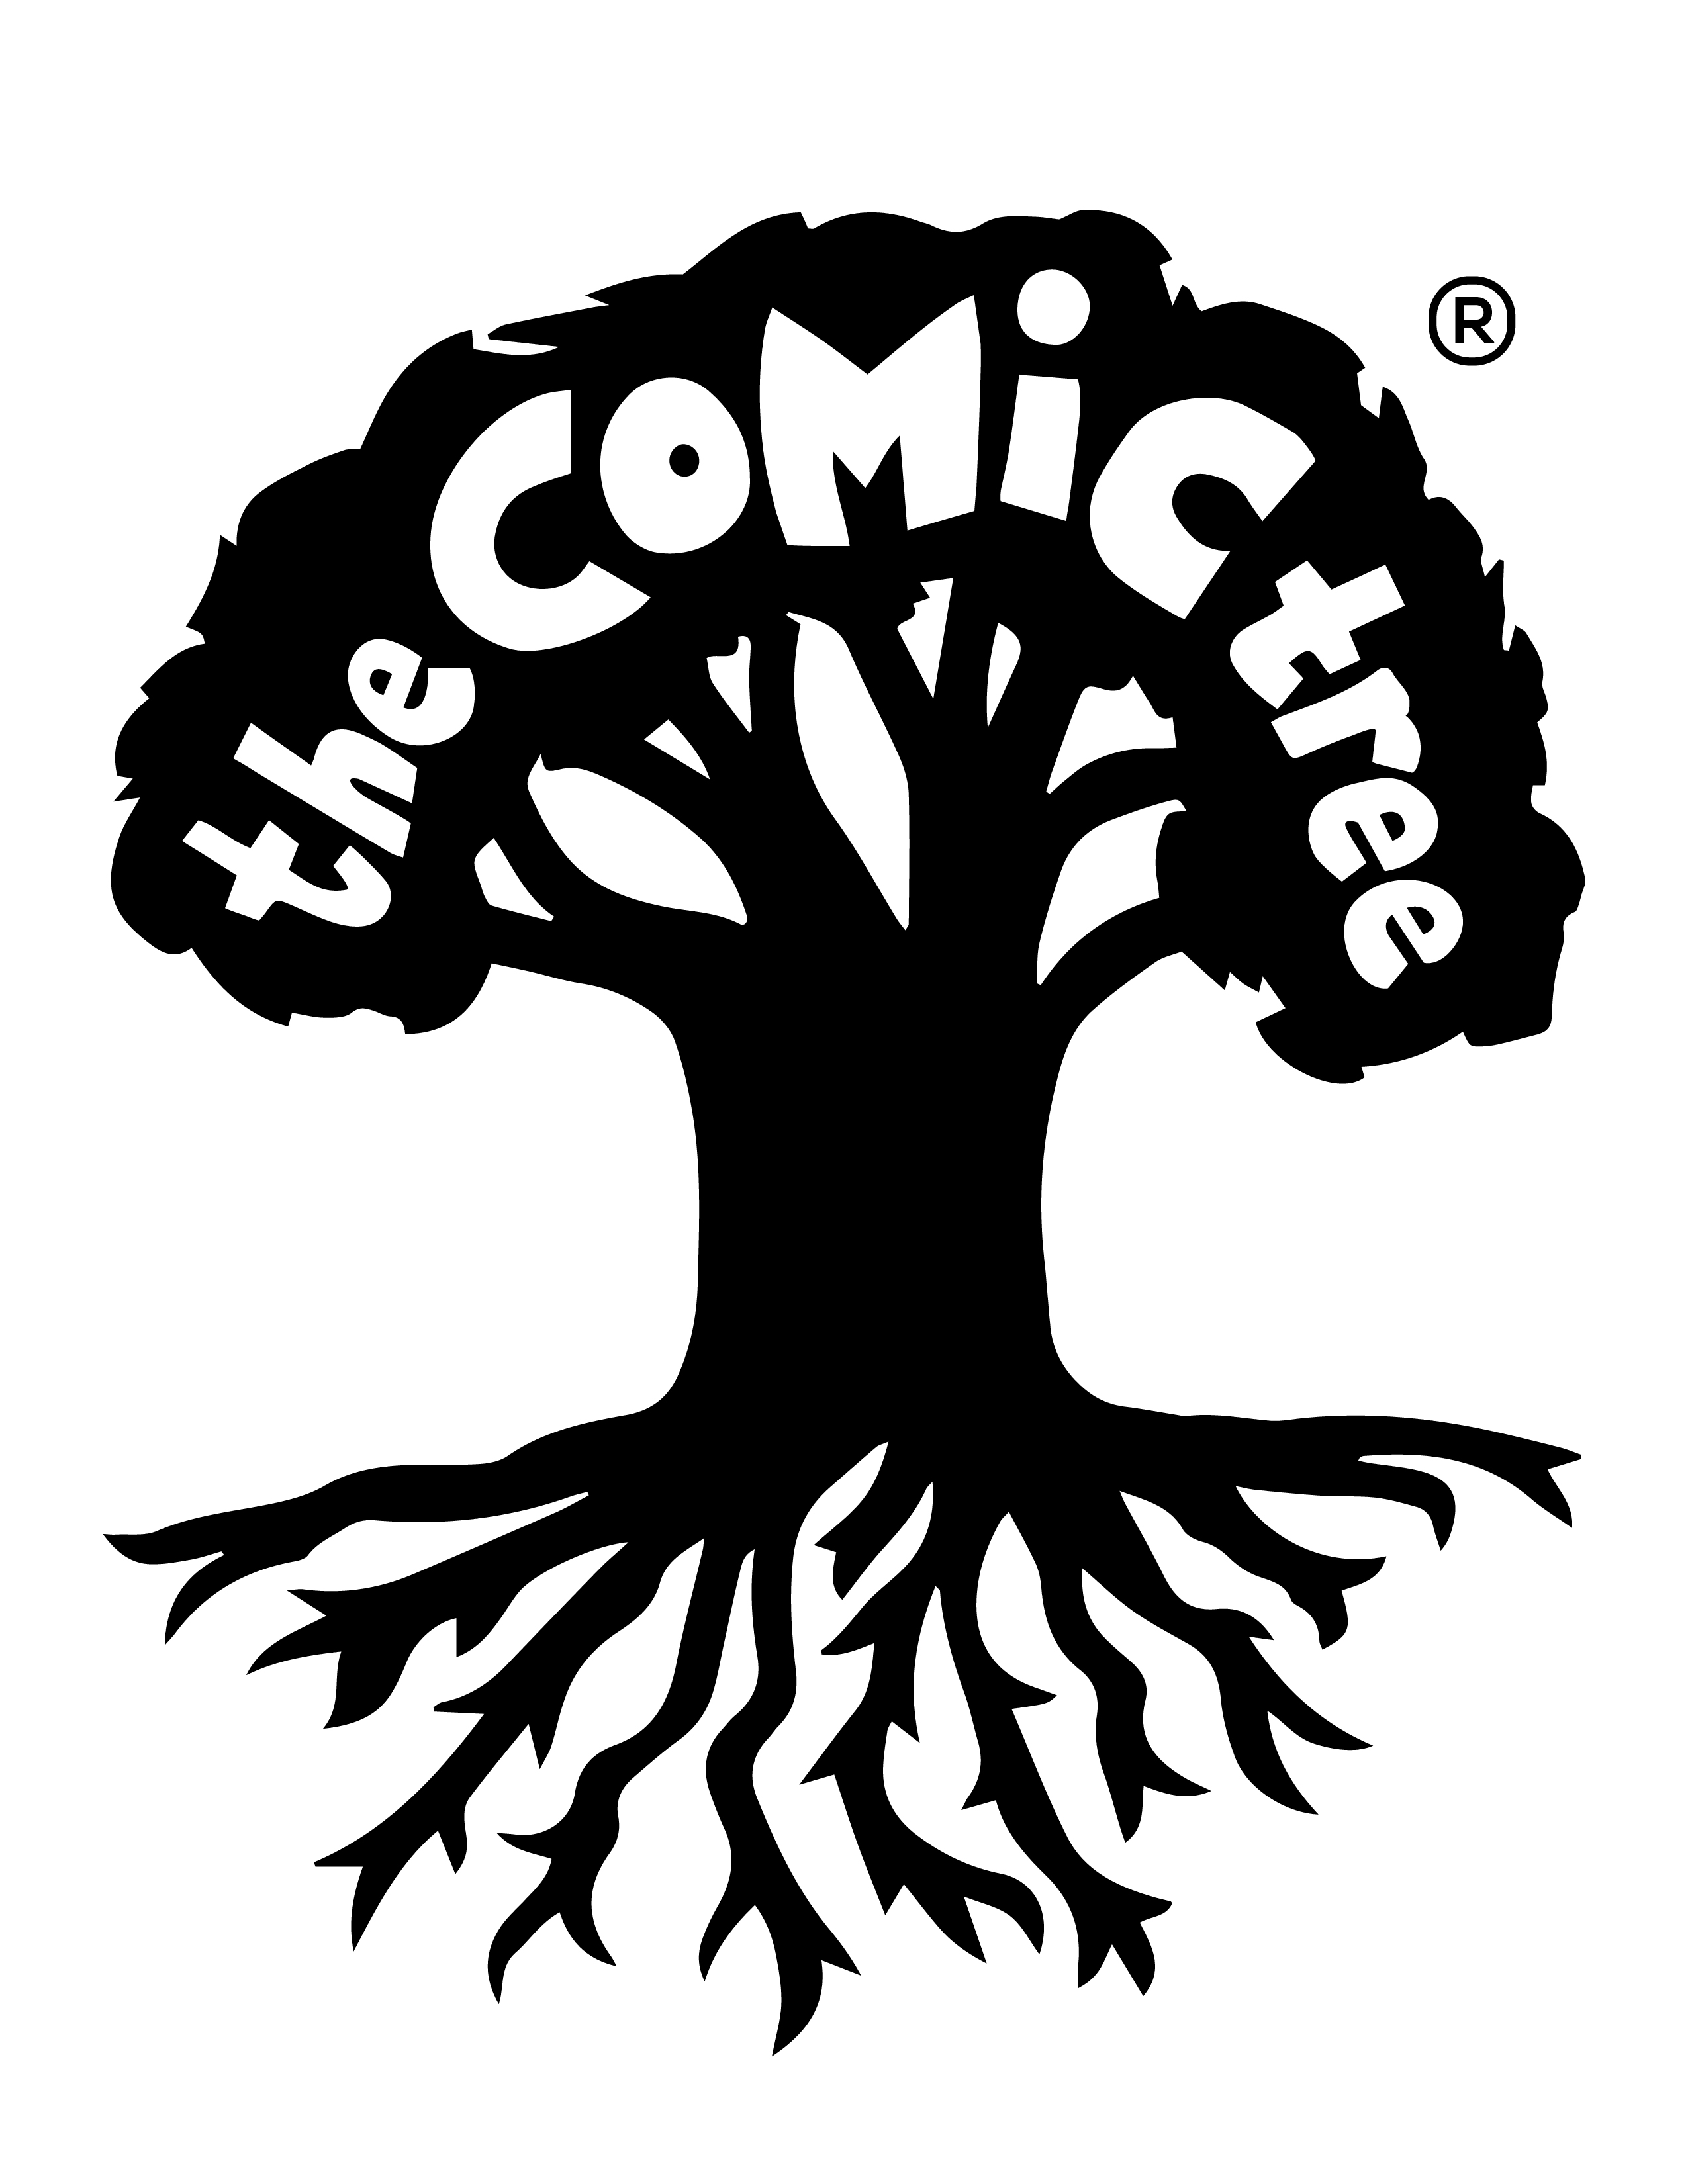 The Comic Tree Logo